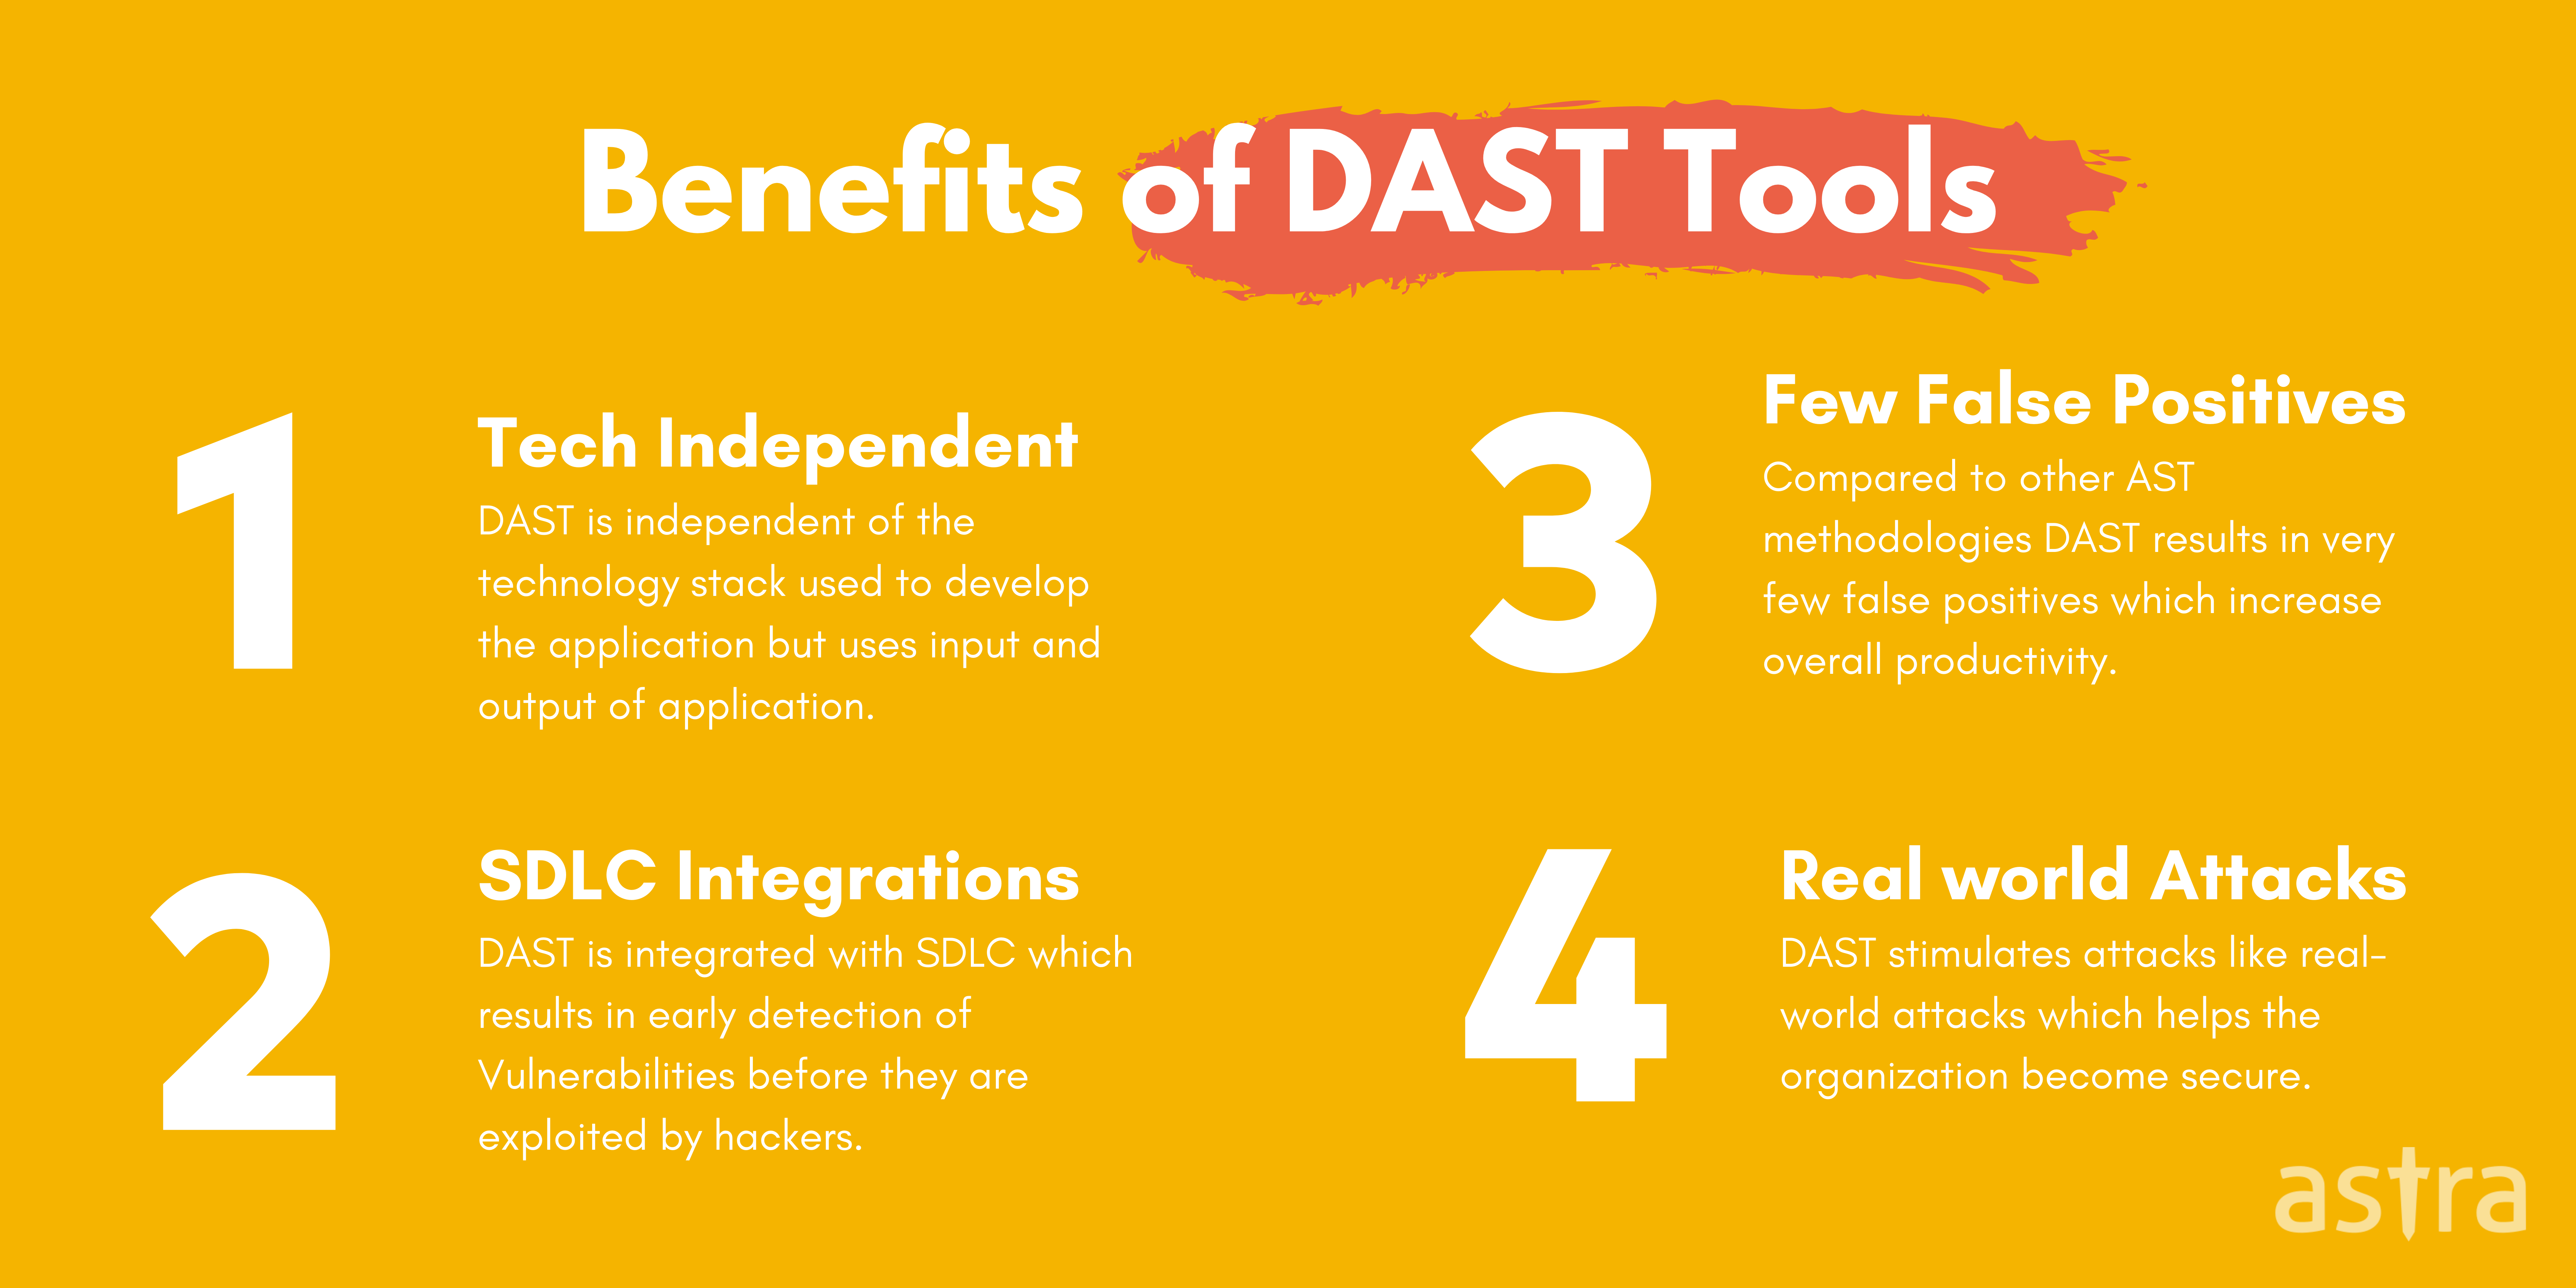 Benefits of DAST Tools